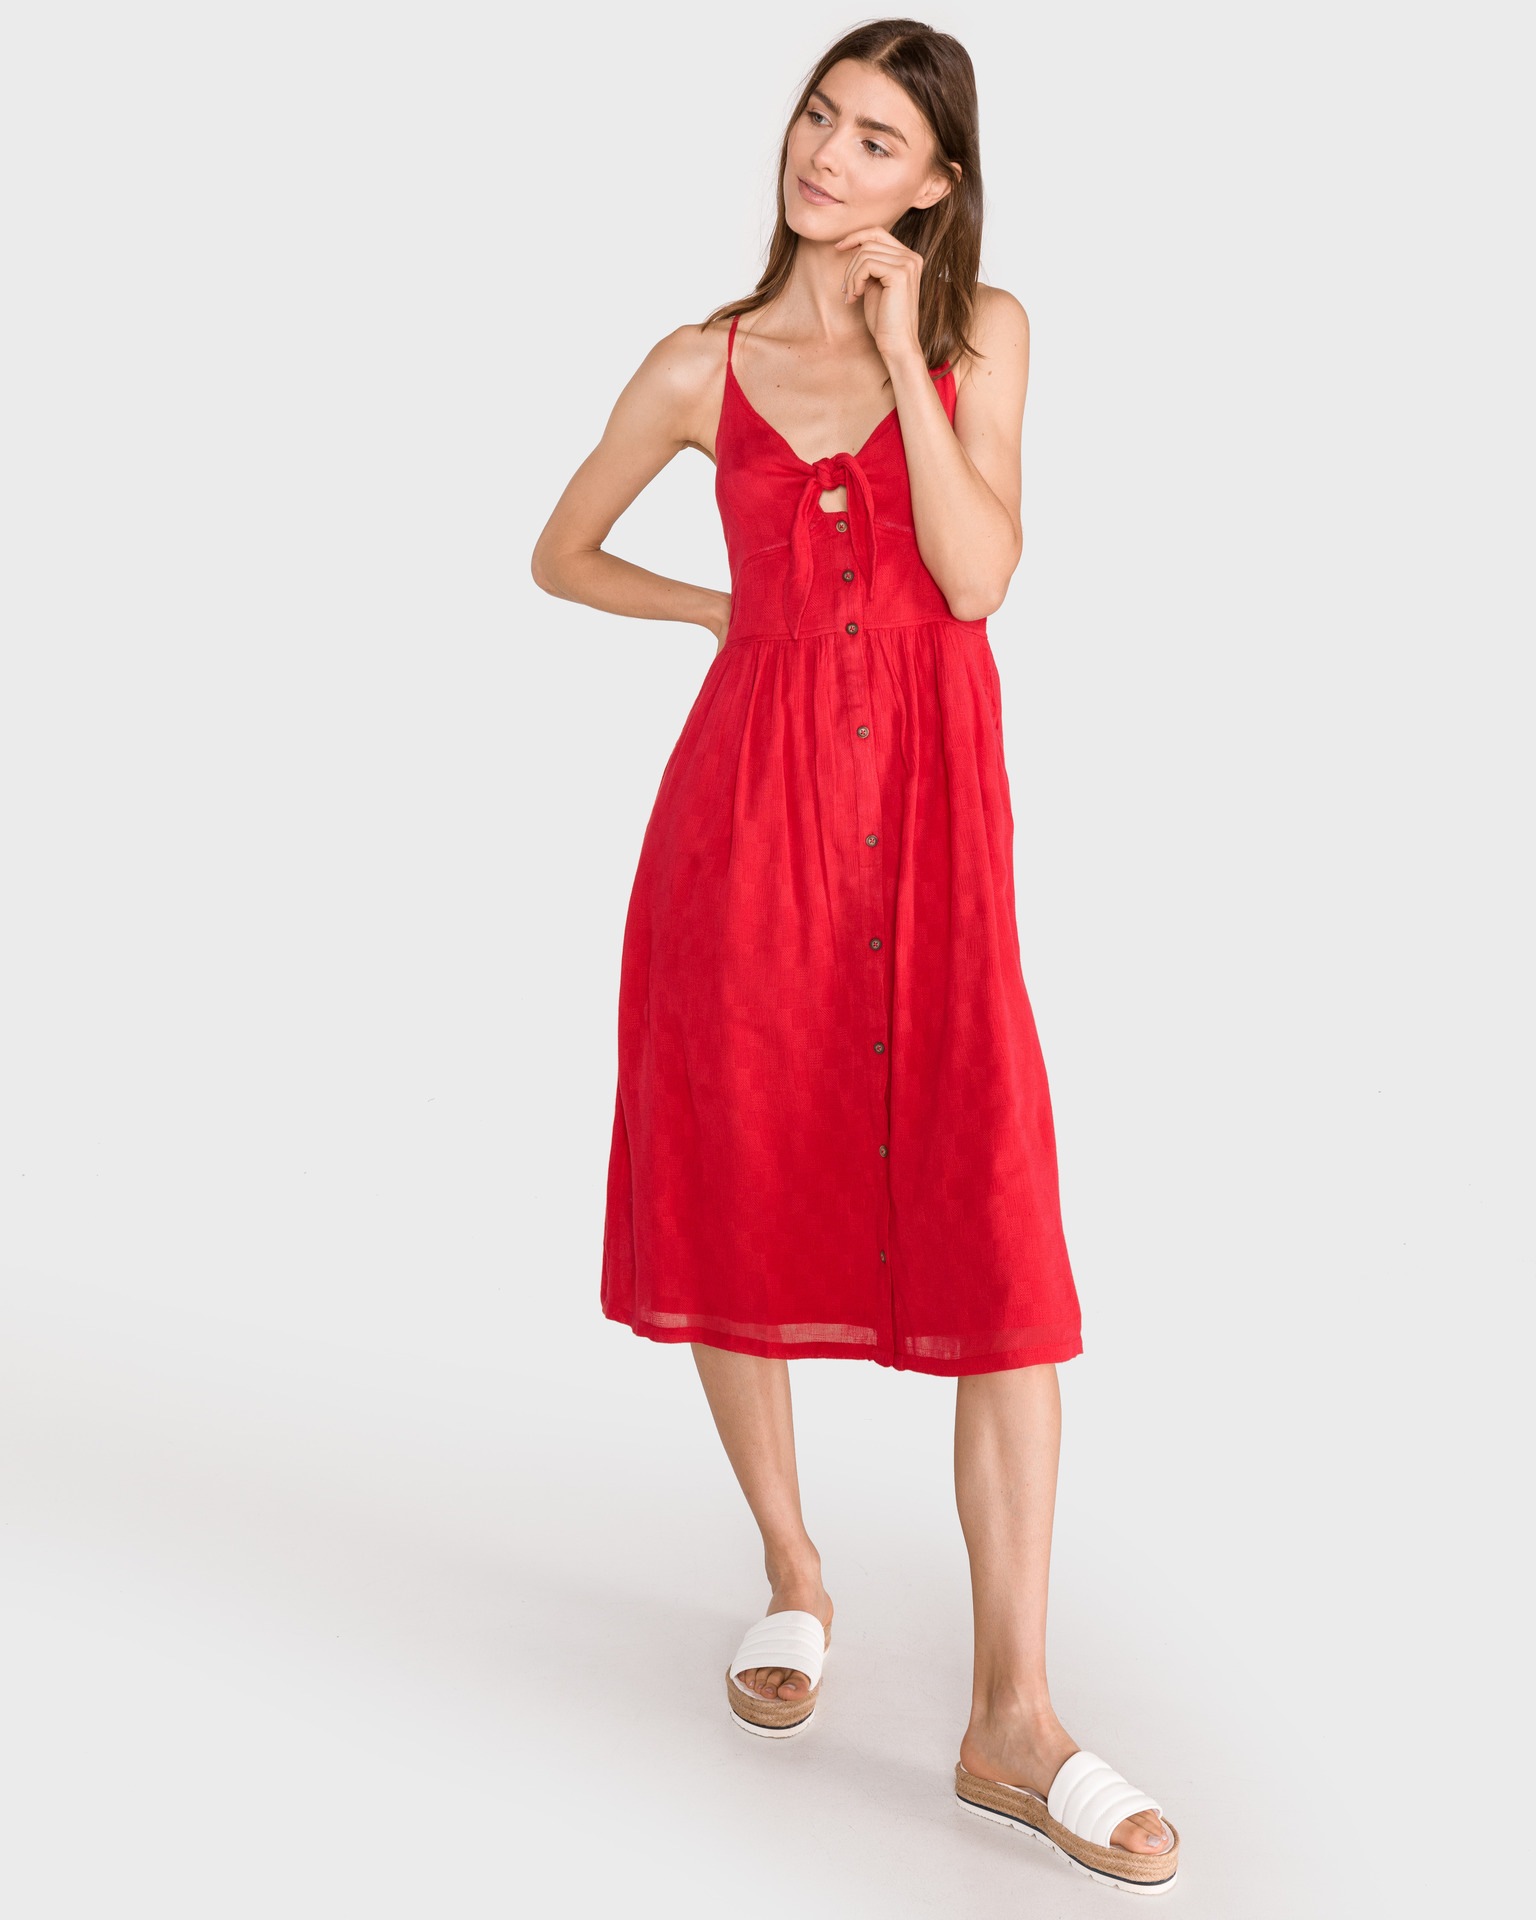 superdry red dress